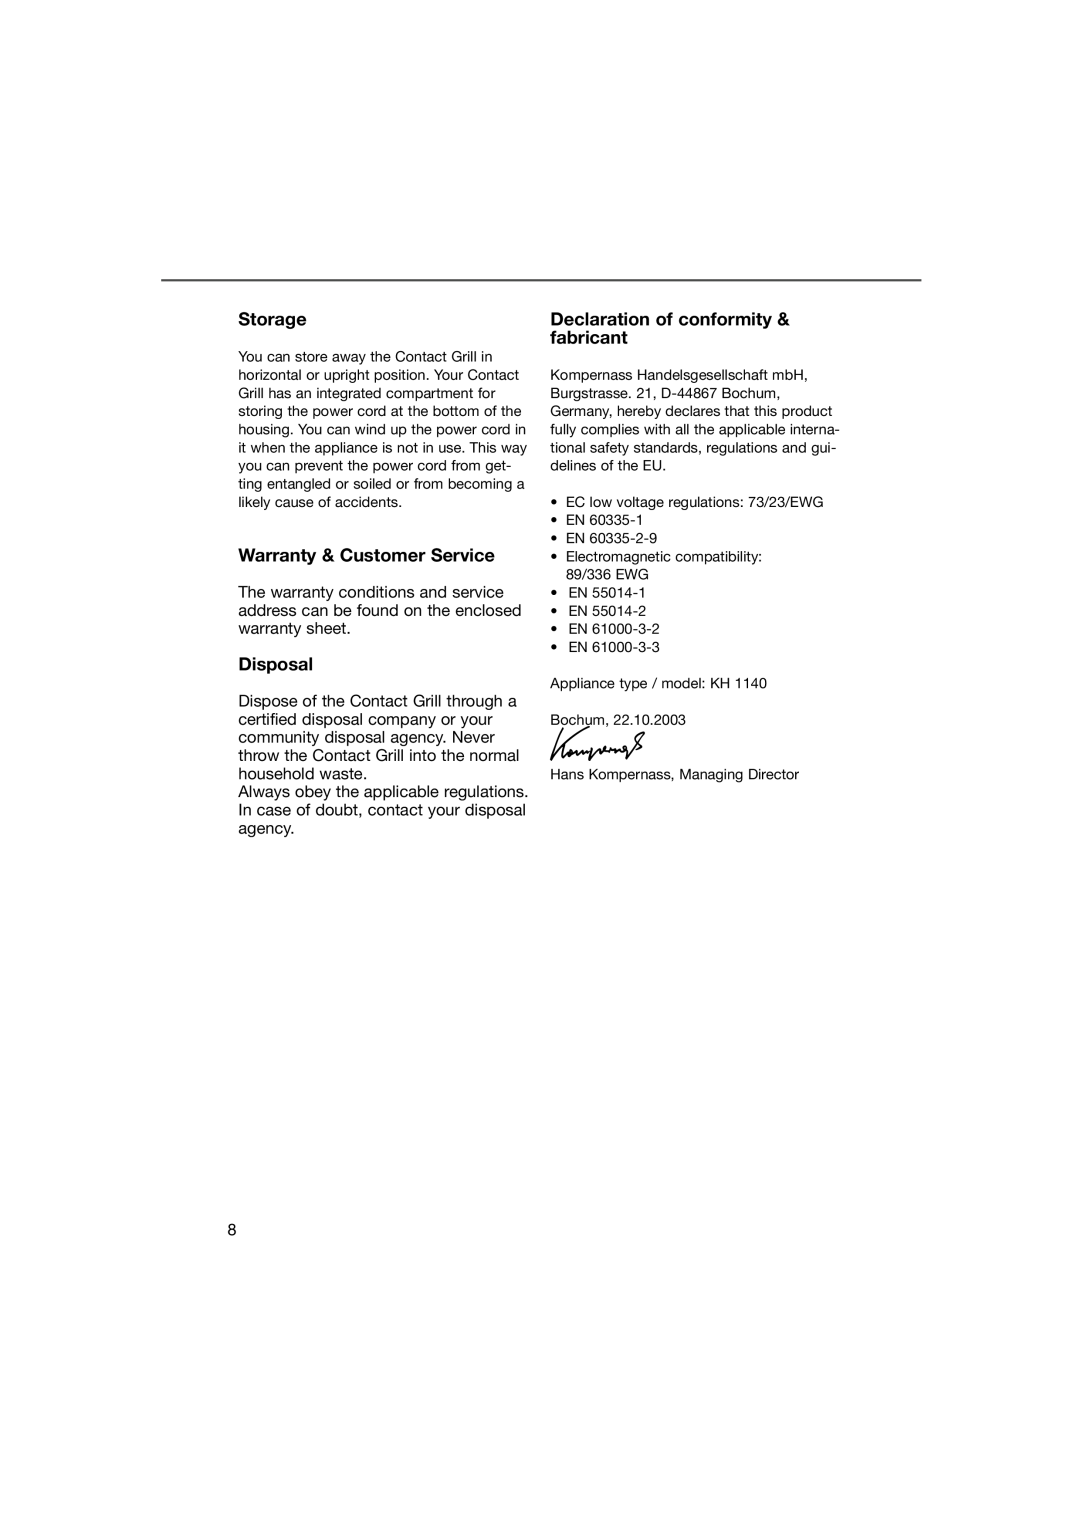 Kompernass KH 1140 manual Storage, Warranty & Customer Service, Disposal, Declaration of conformity & fabricant 